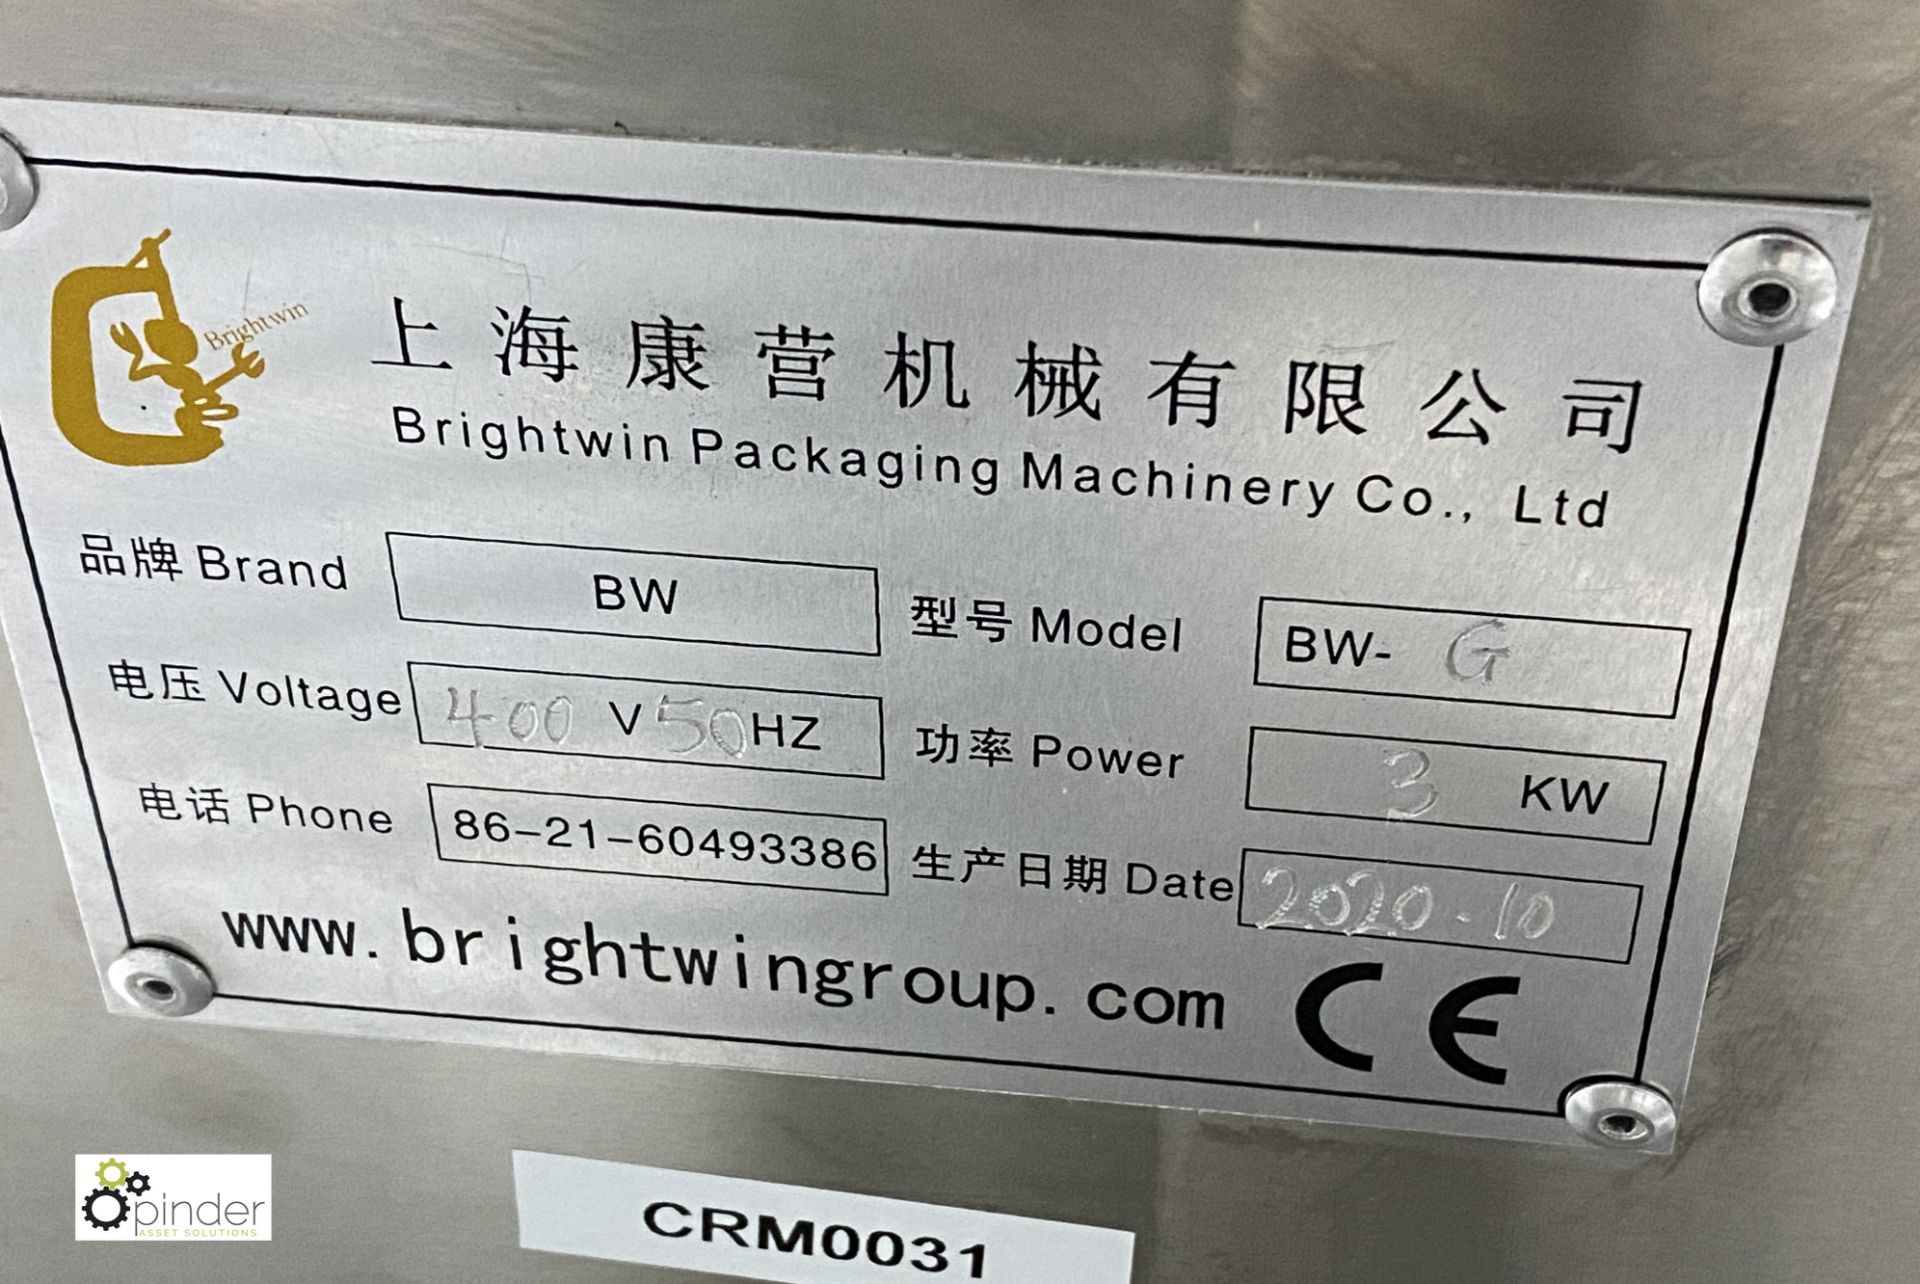 Brightwin Packaging Machinery Co Ltd BW-G 24-station Test/Vape Tube Filling Machine, capacity 3200 - Image 3 of 13